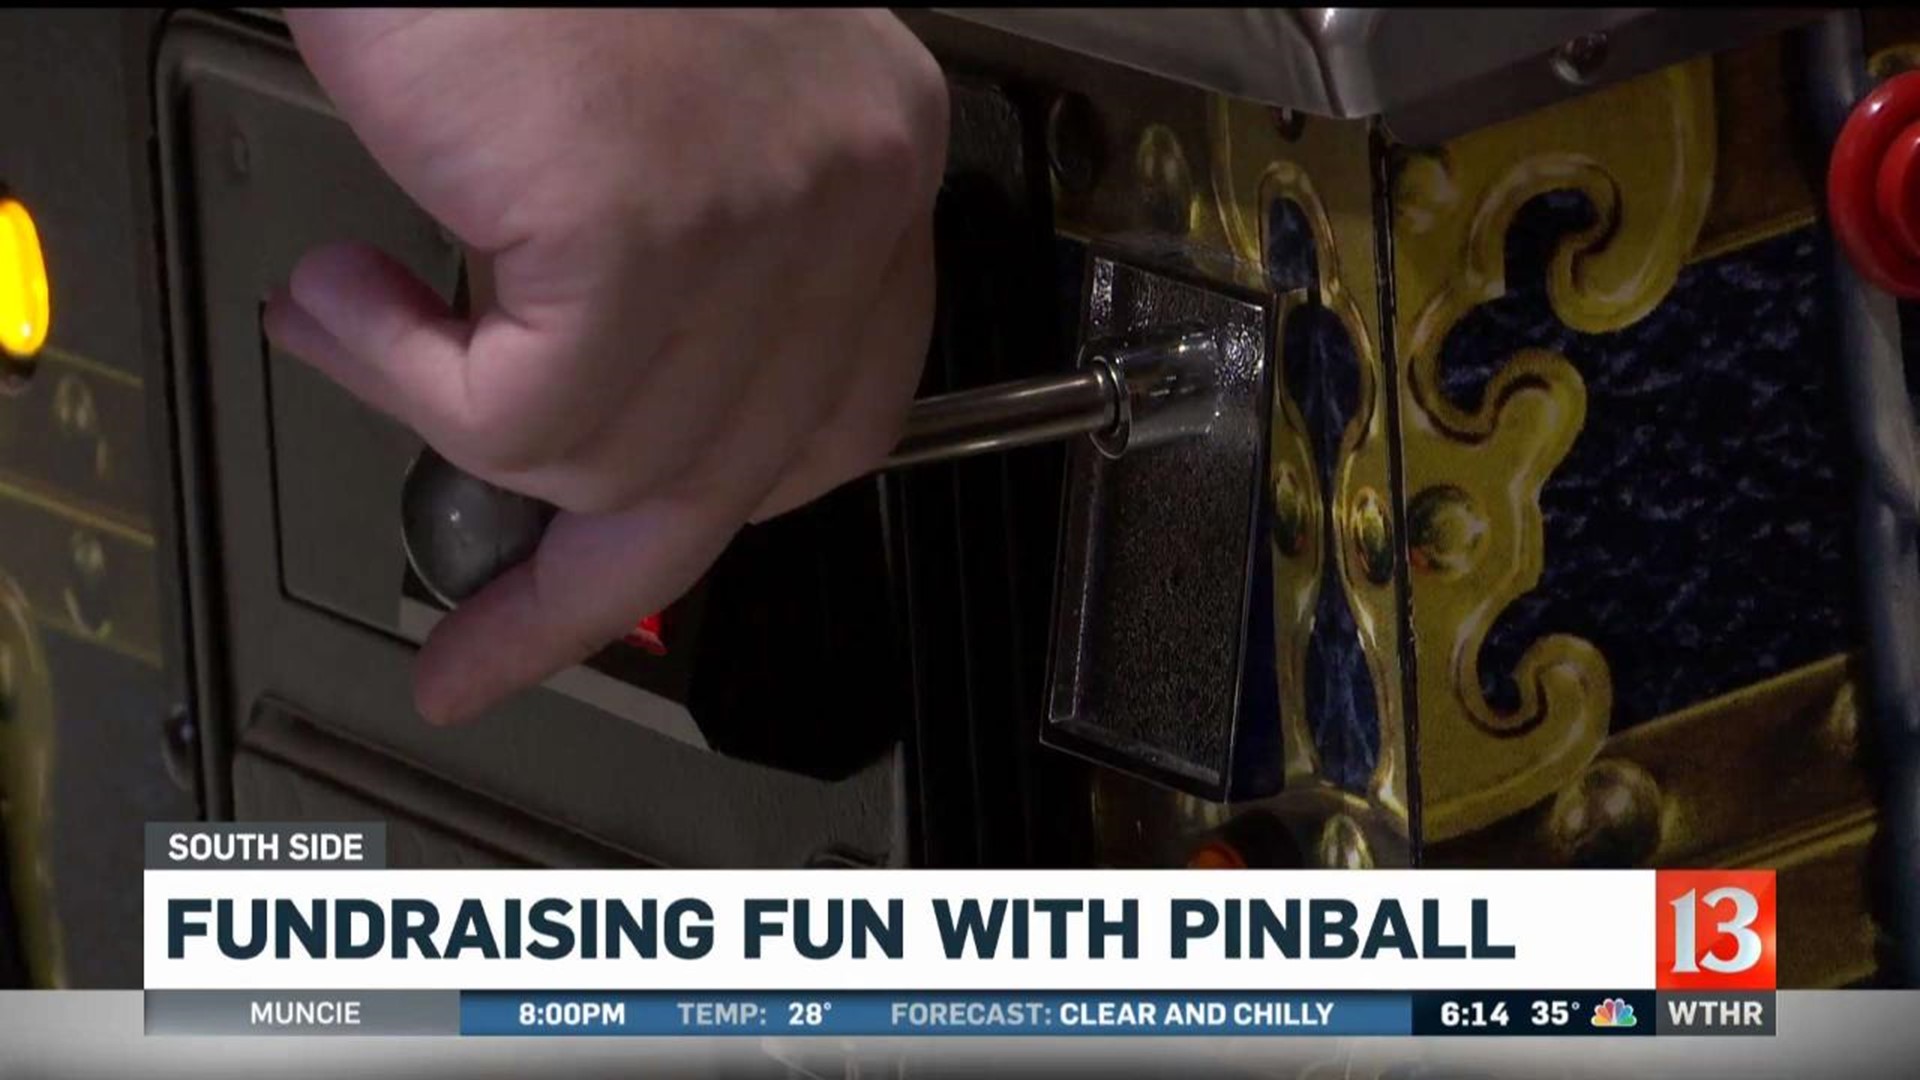 Unlimited pinball fundraiser